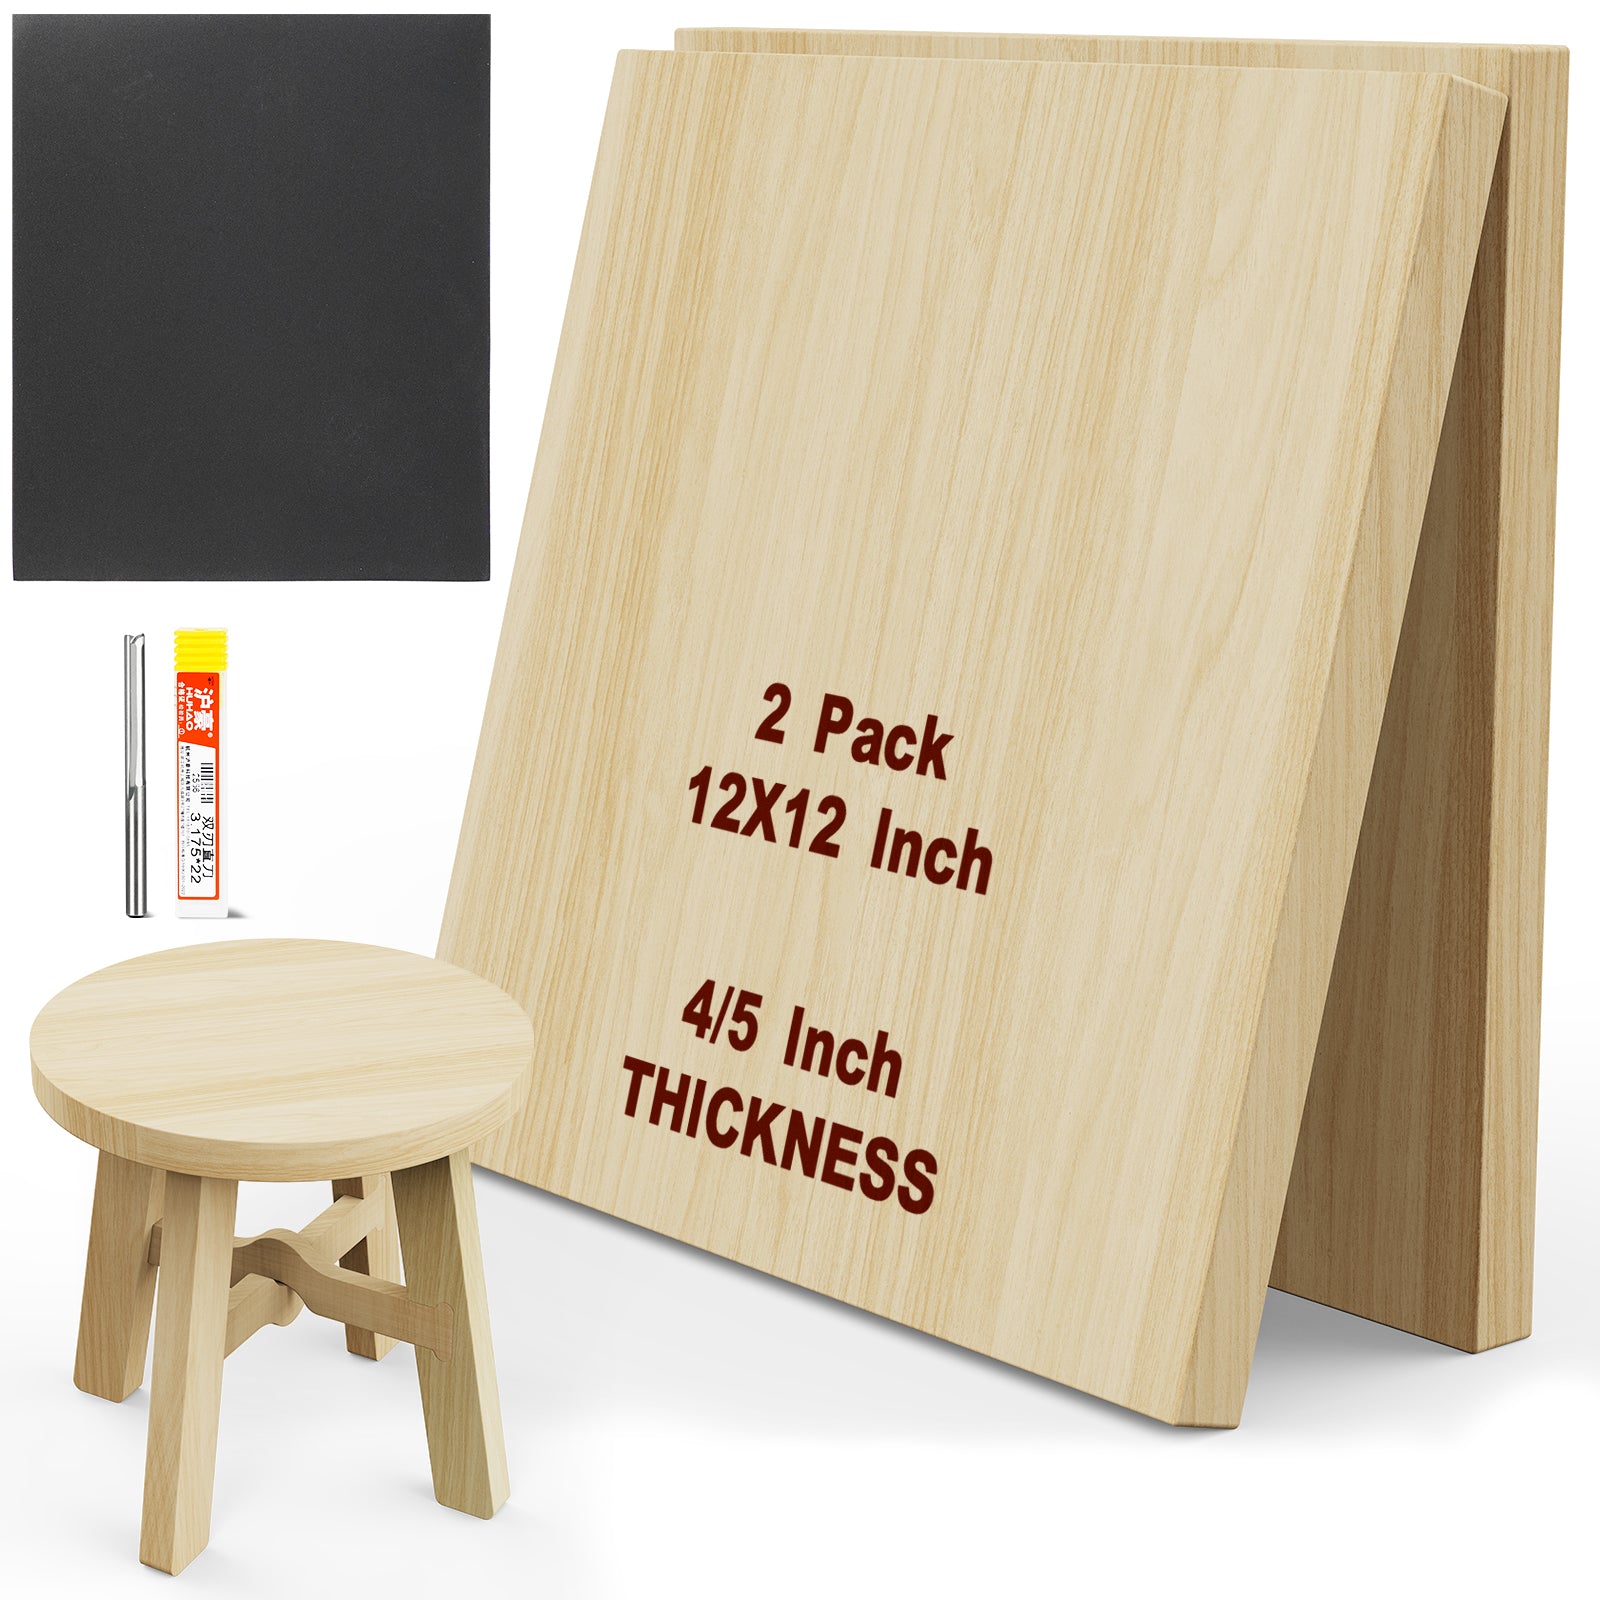 CNC Wood Blanks - Pine Board short stool DIY kits – TwoTrees Official Shop